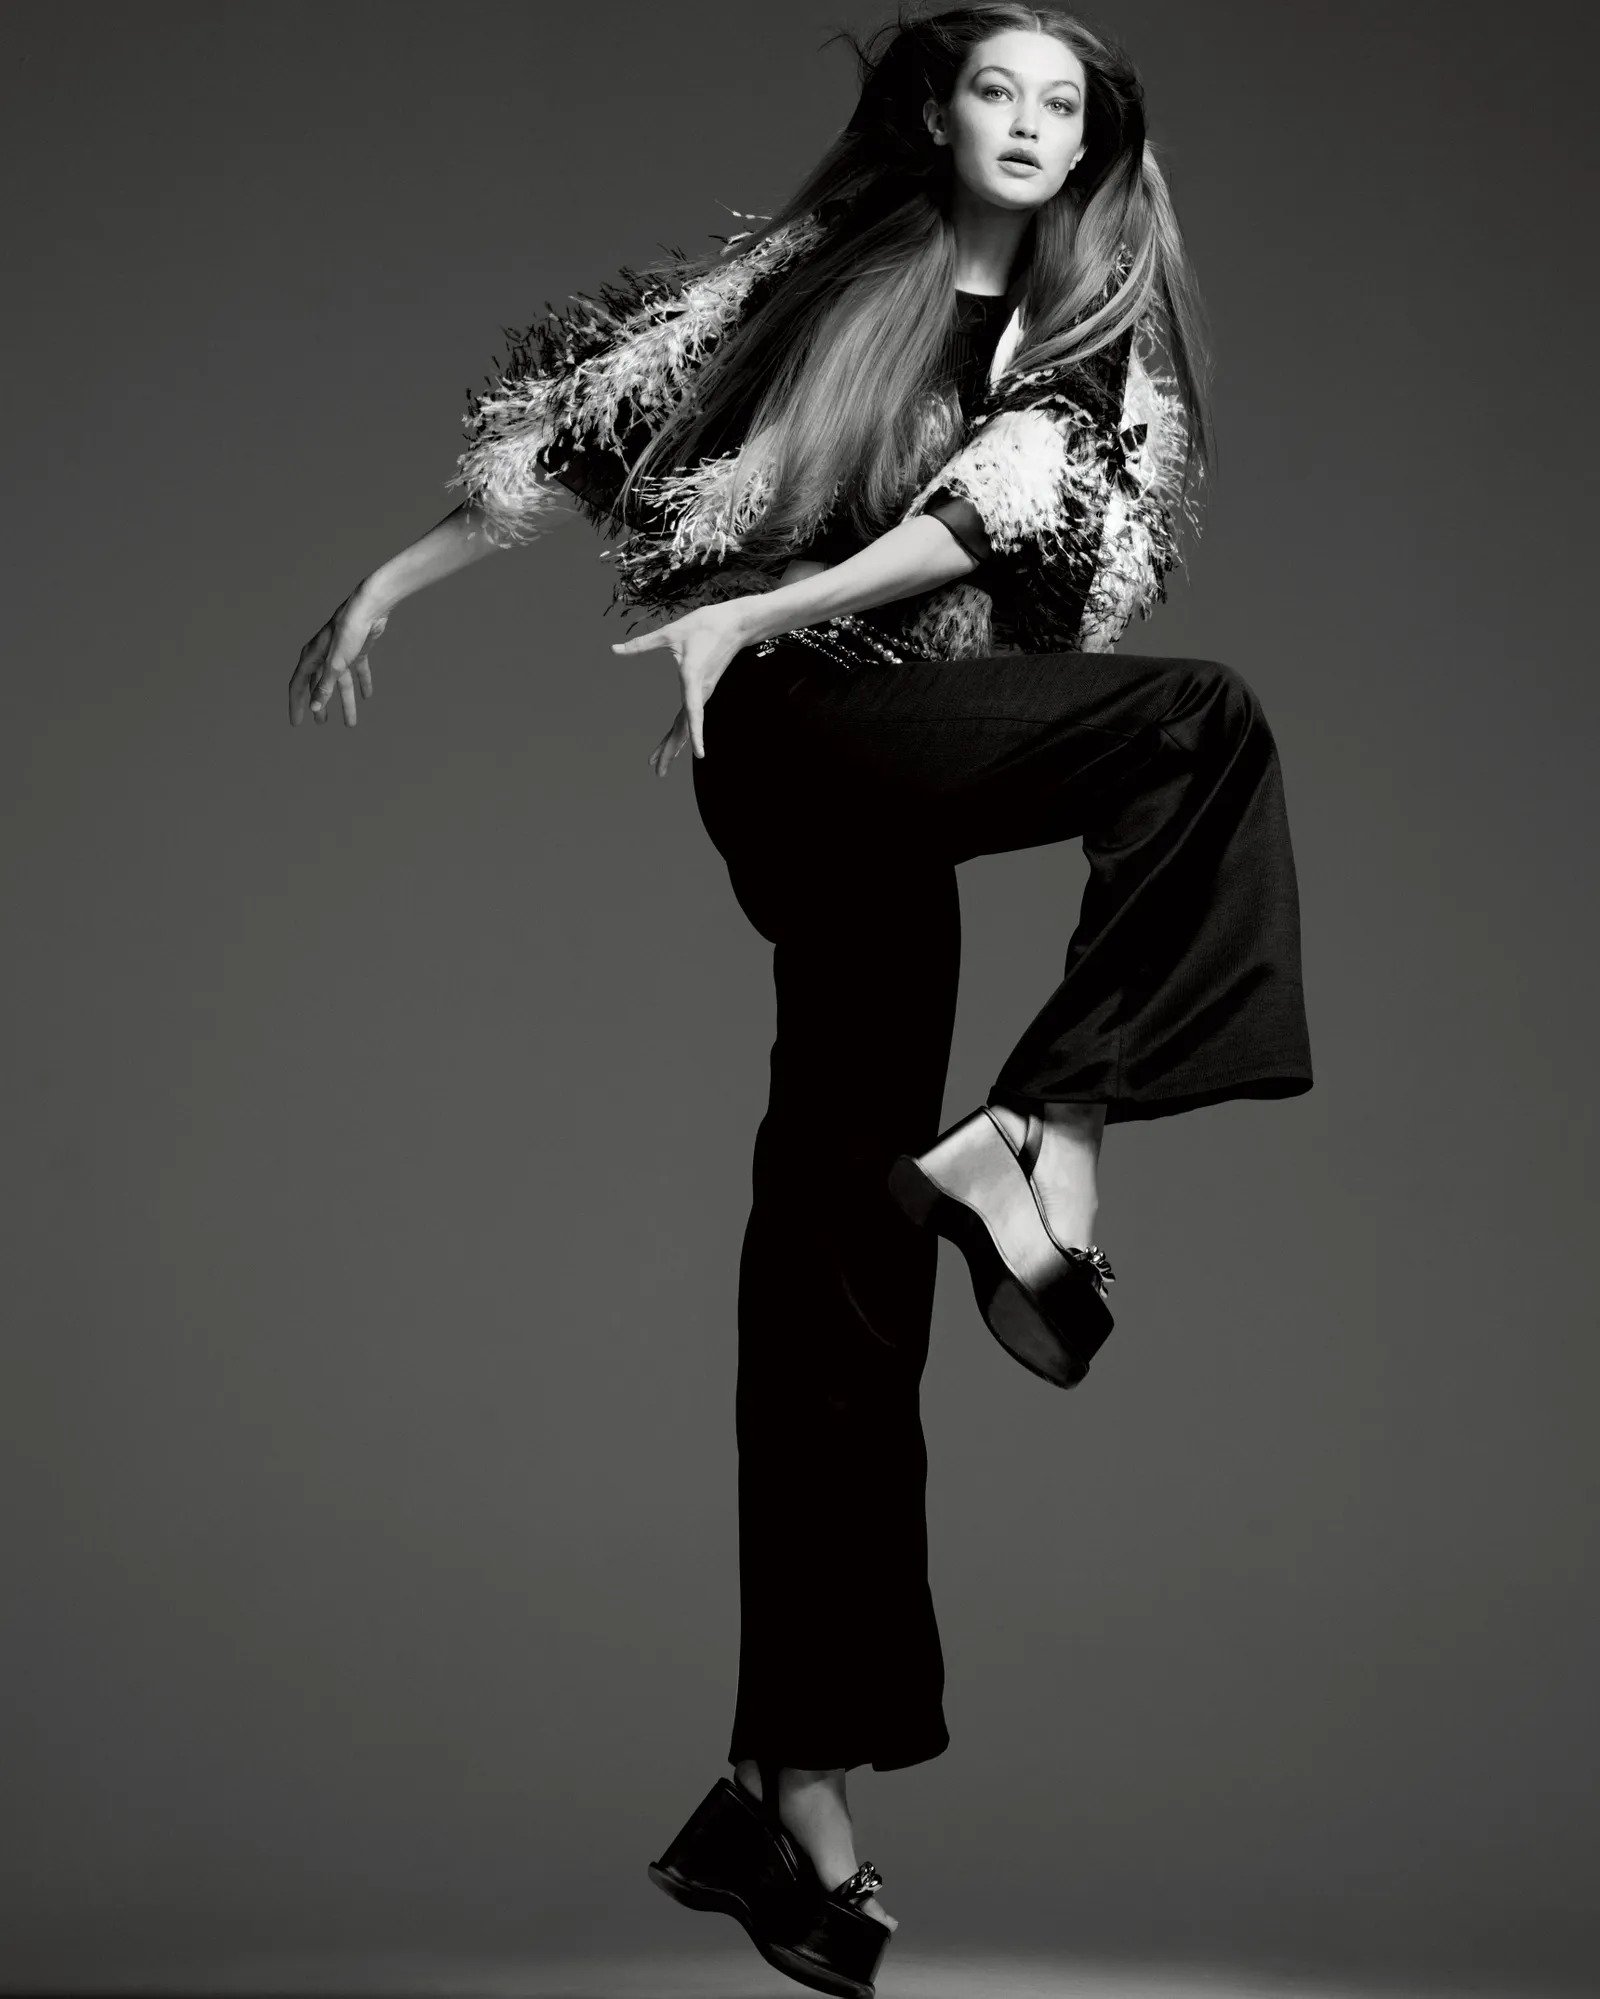 FOTOS Gigi Hadid est de vuelta en Vogue! - Photo 5